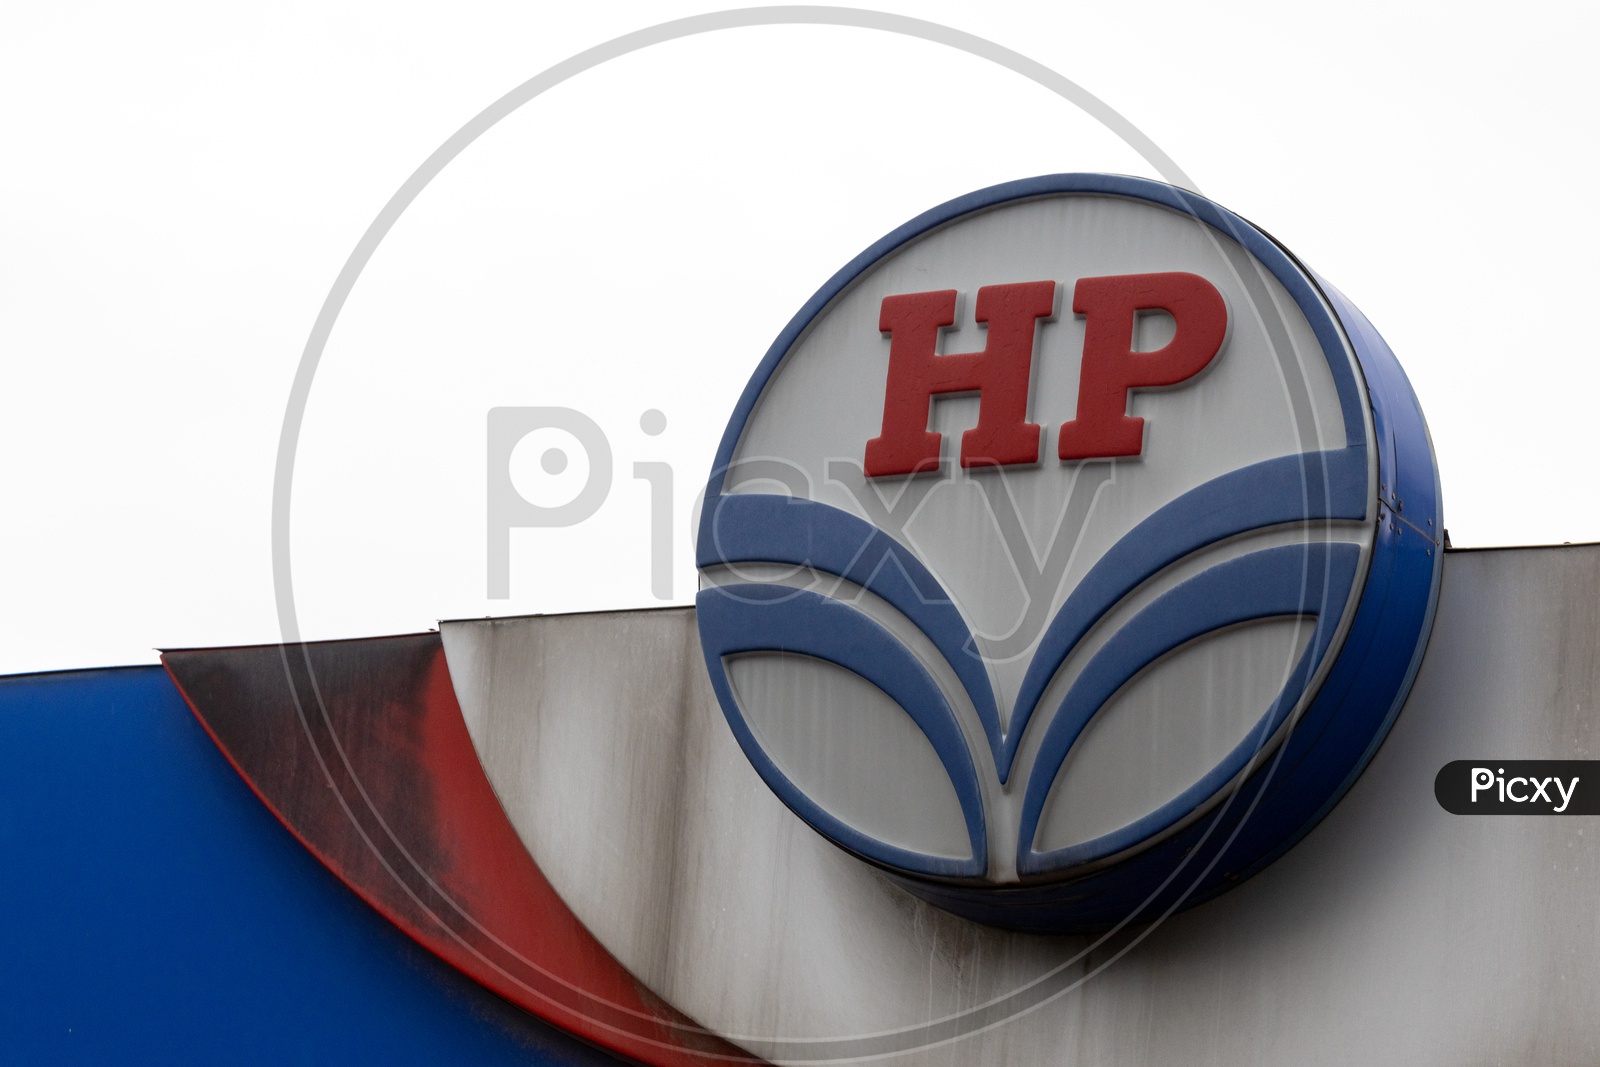 Led Acrylic HP Petrol Pump Logo, Shape: Round at Rs 5000/piece in New Delhi  | ID: 2852959524348